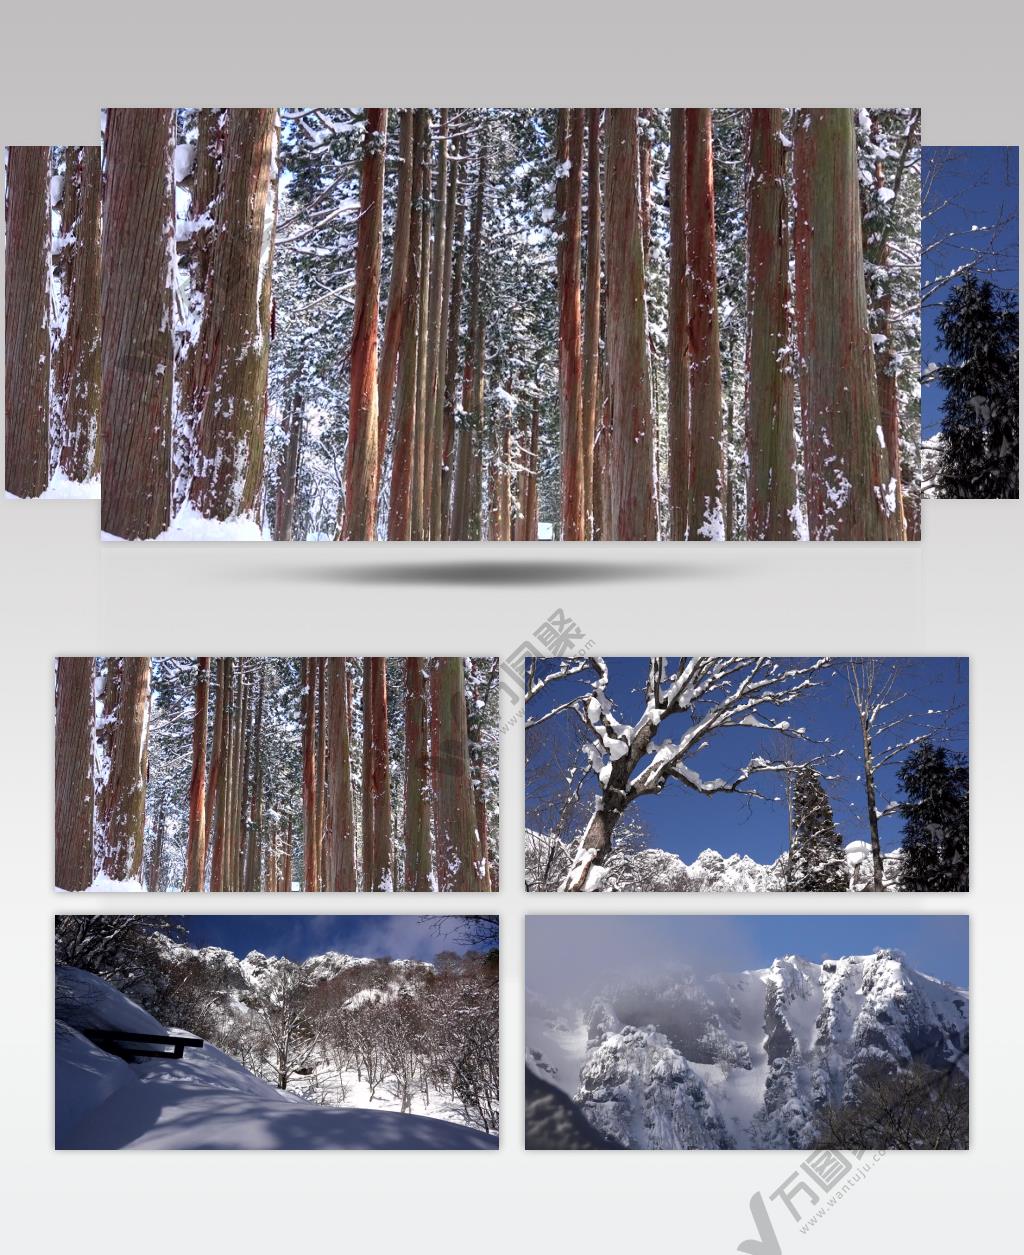 ［4K］ 雪景 4K片源 超高清实拍视频素材 自然风景山水花草树木瀑布超清素材